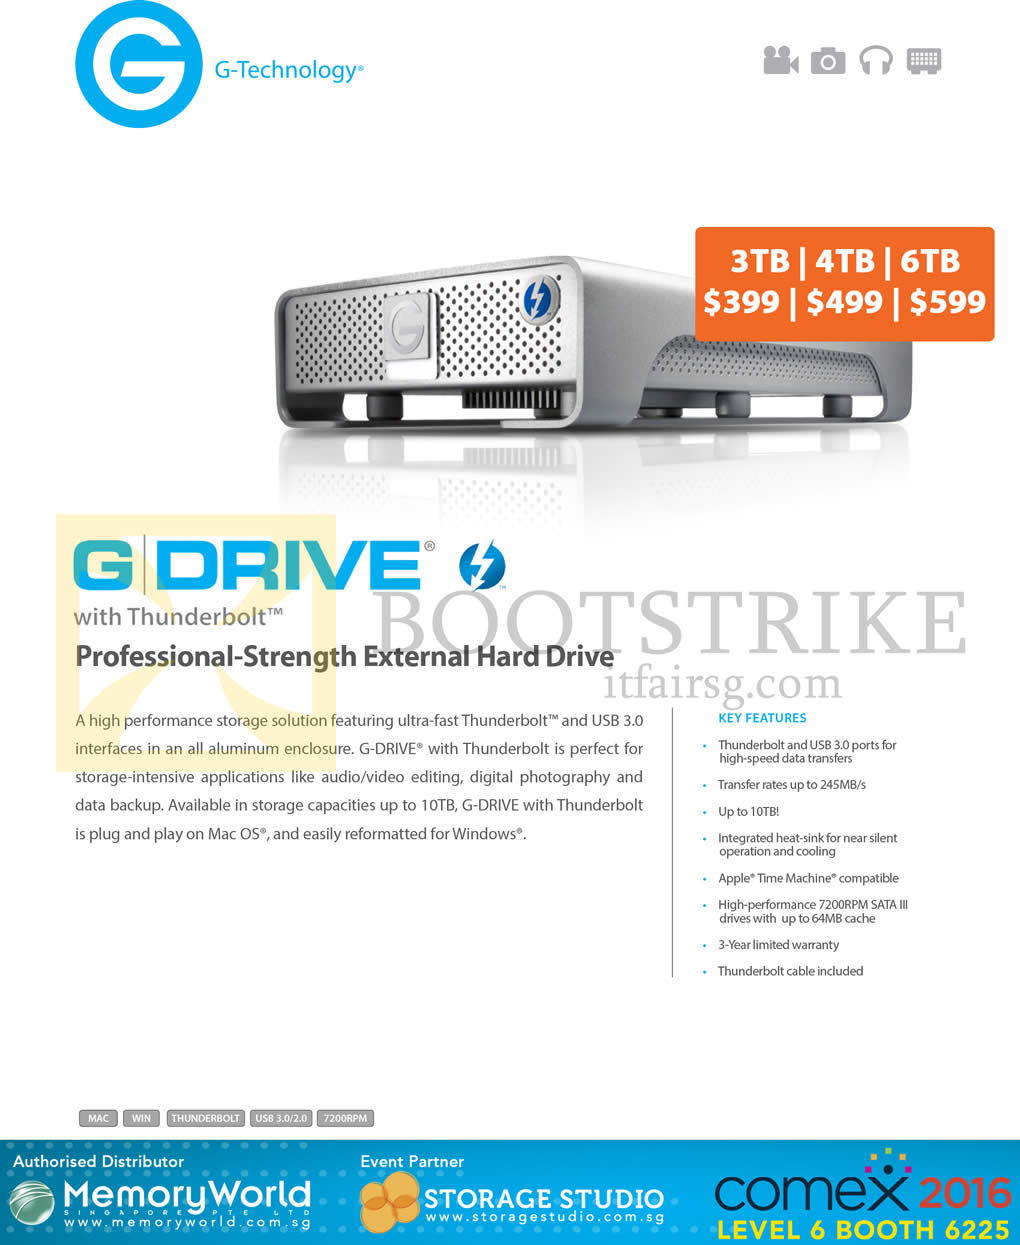 COMEX 2016 price list image brochure of Memory World G-Technology G Drive Thunderbolt 3TB, 4TB, 6TB